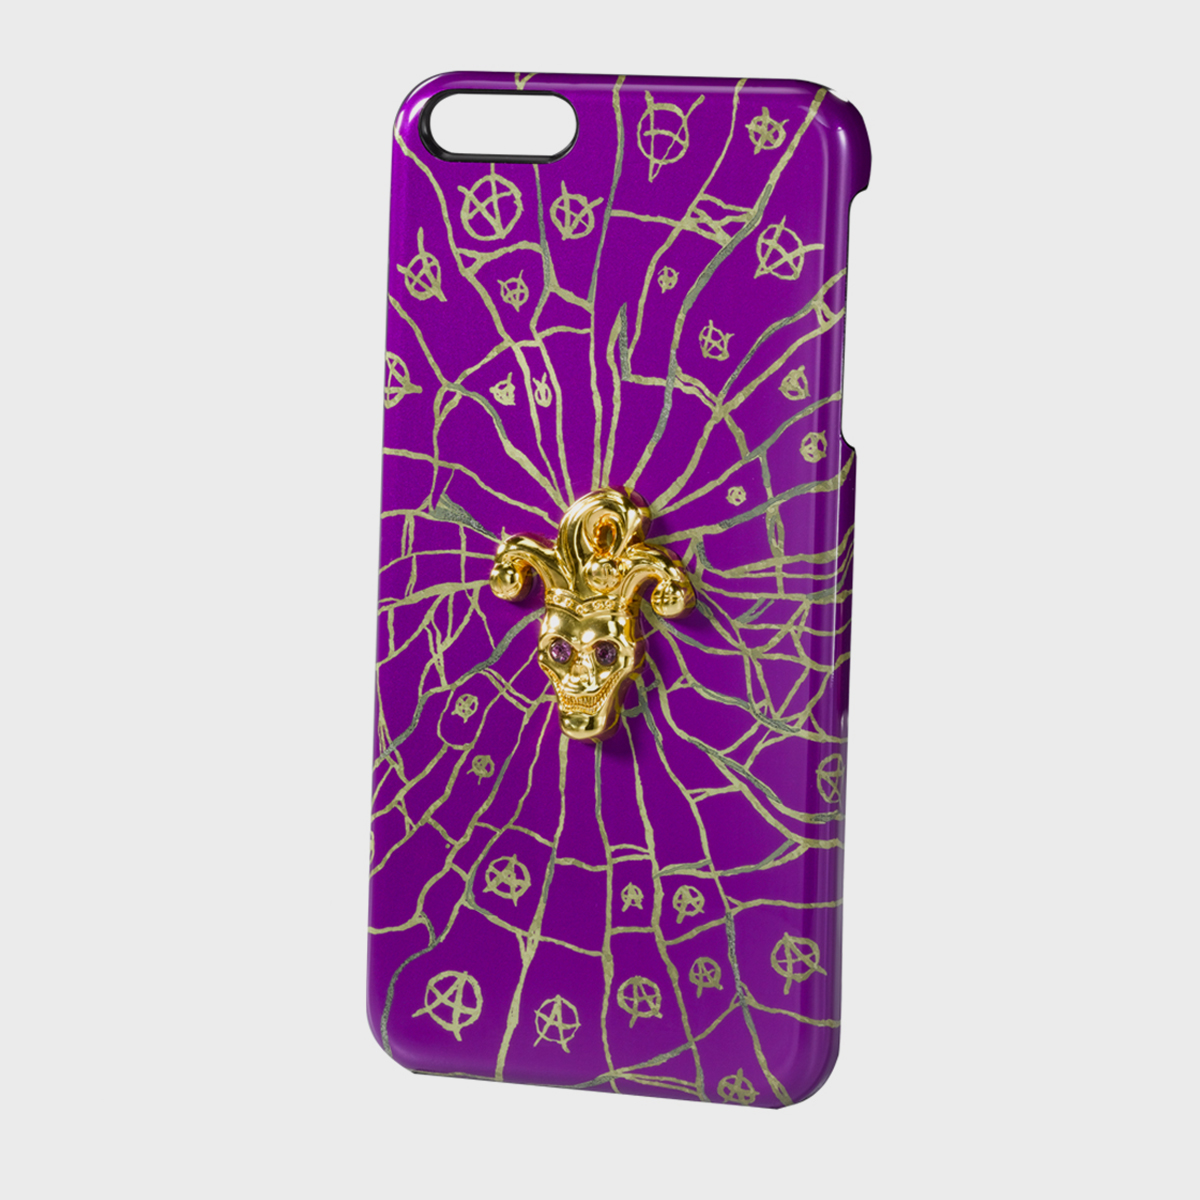 Joker Crest iPhone case 6 (3)